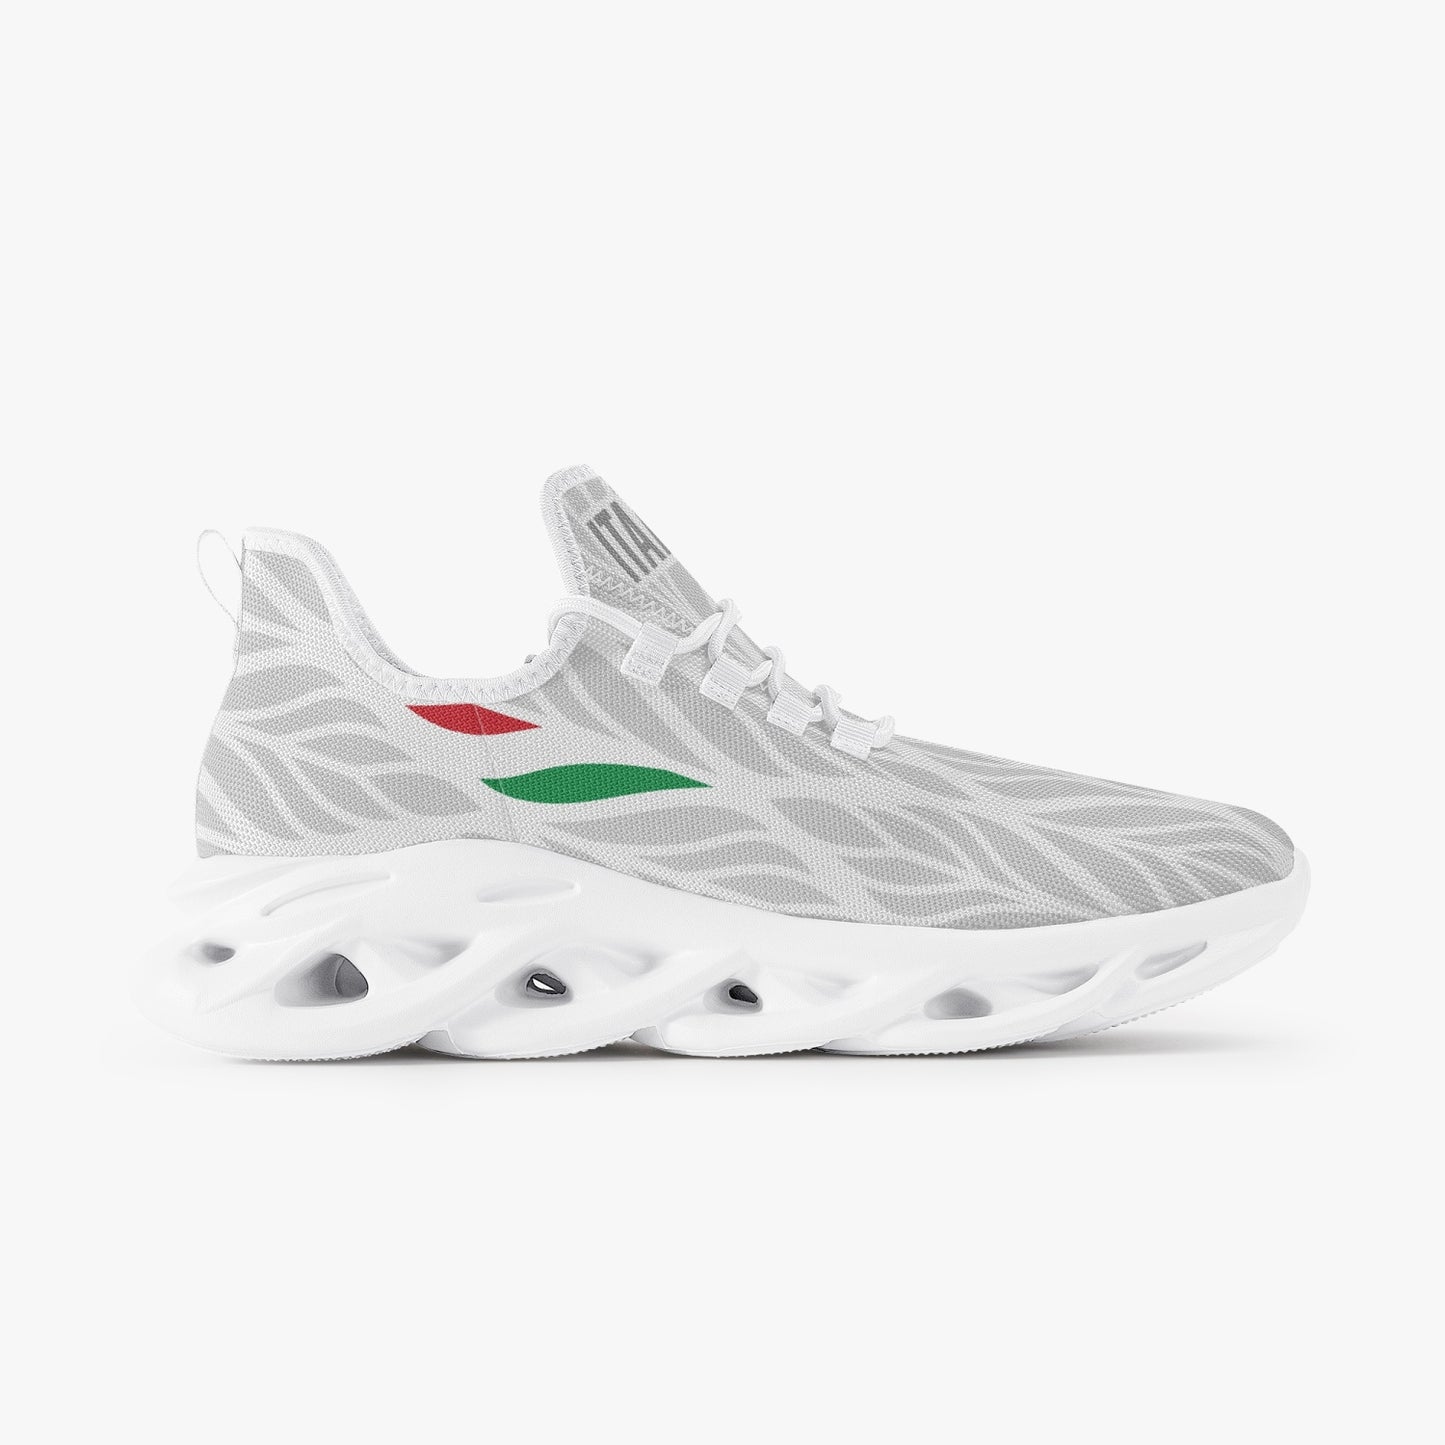 Sneakers Bianco - Italia air+ 1 - donna